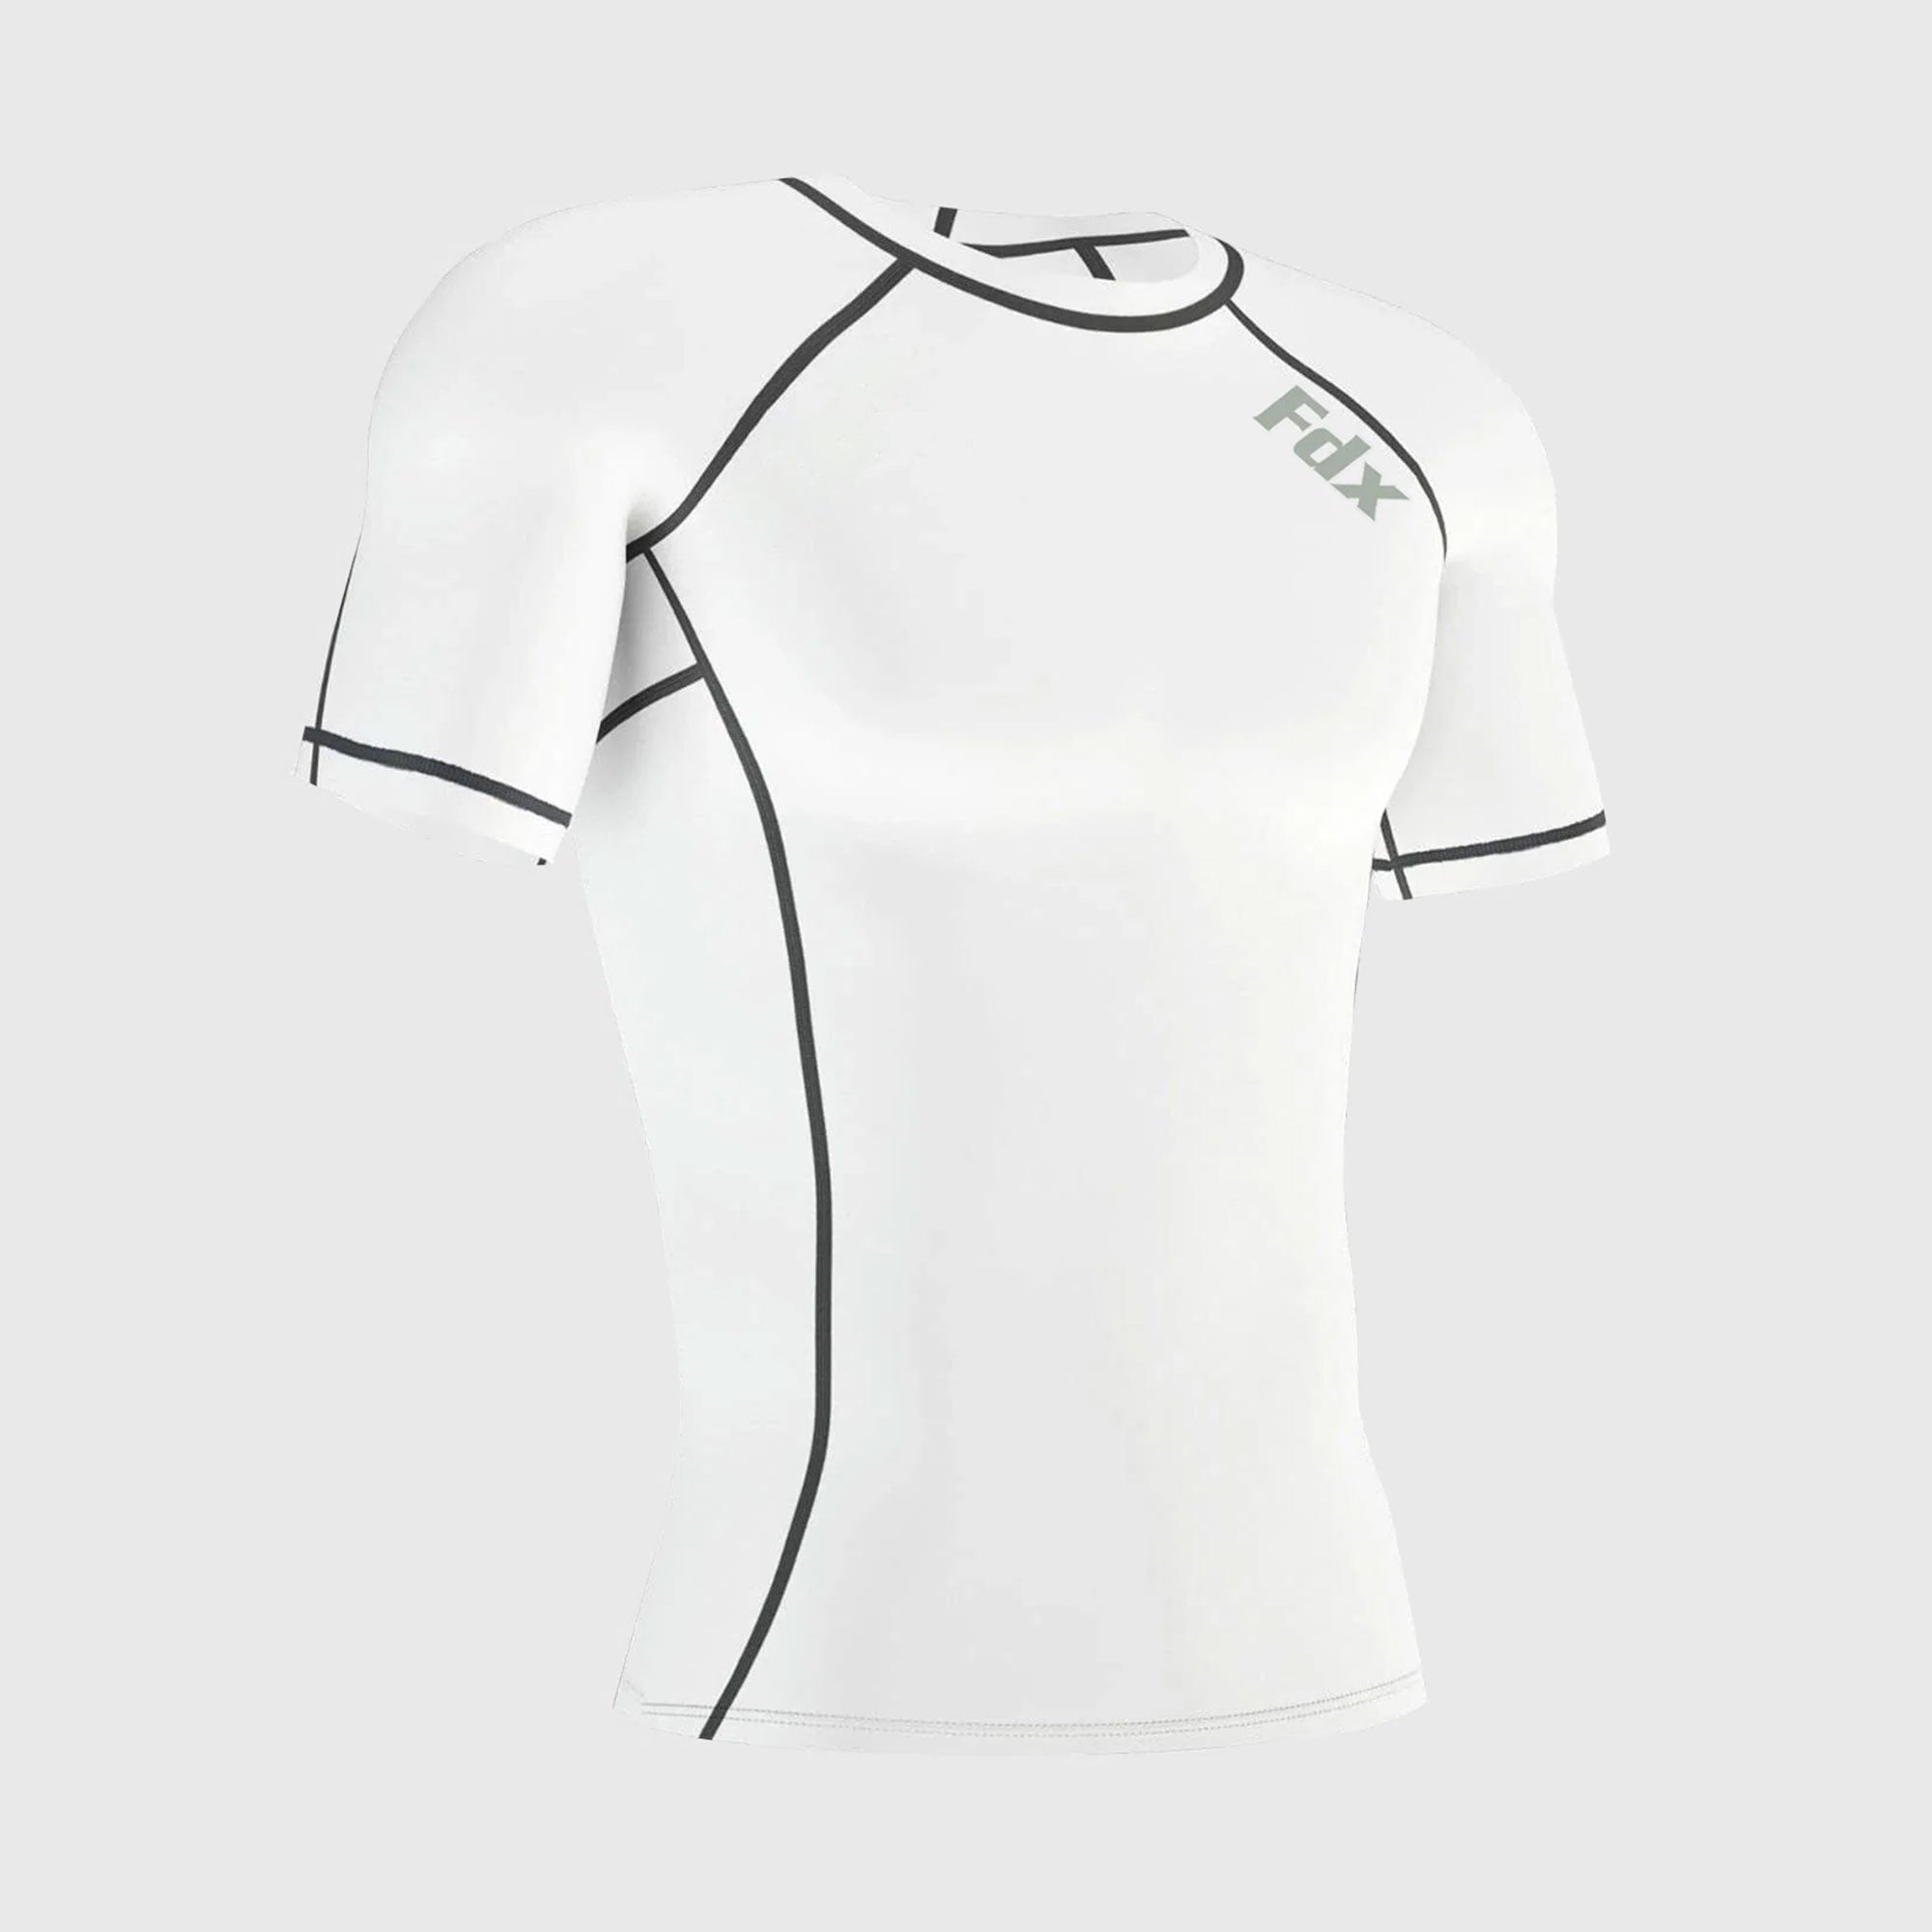 Fdx Cosmic White Men's Short Sleeve Base Layer Gym Shirt